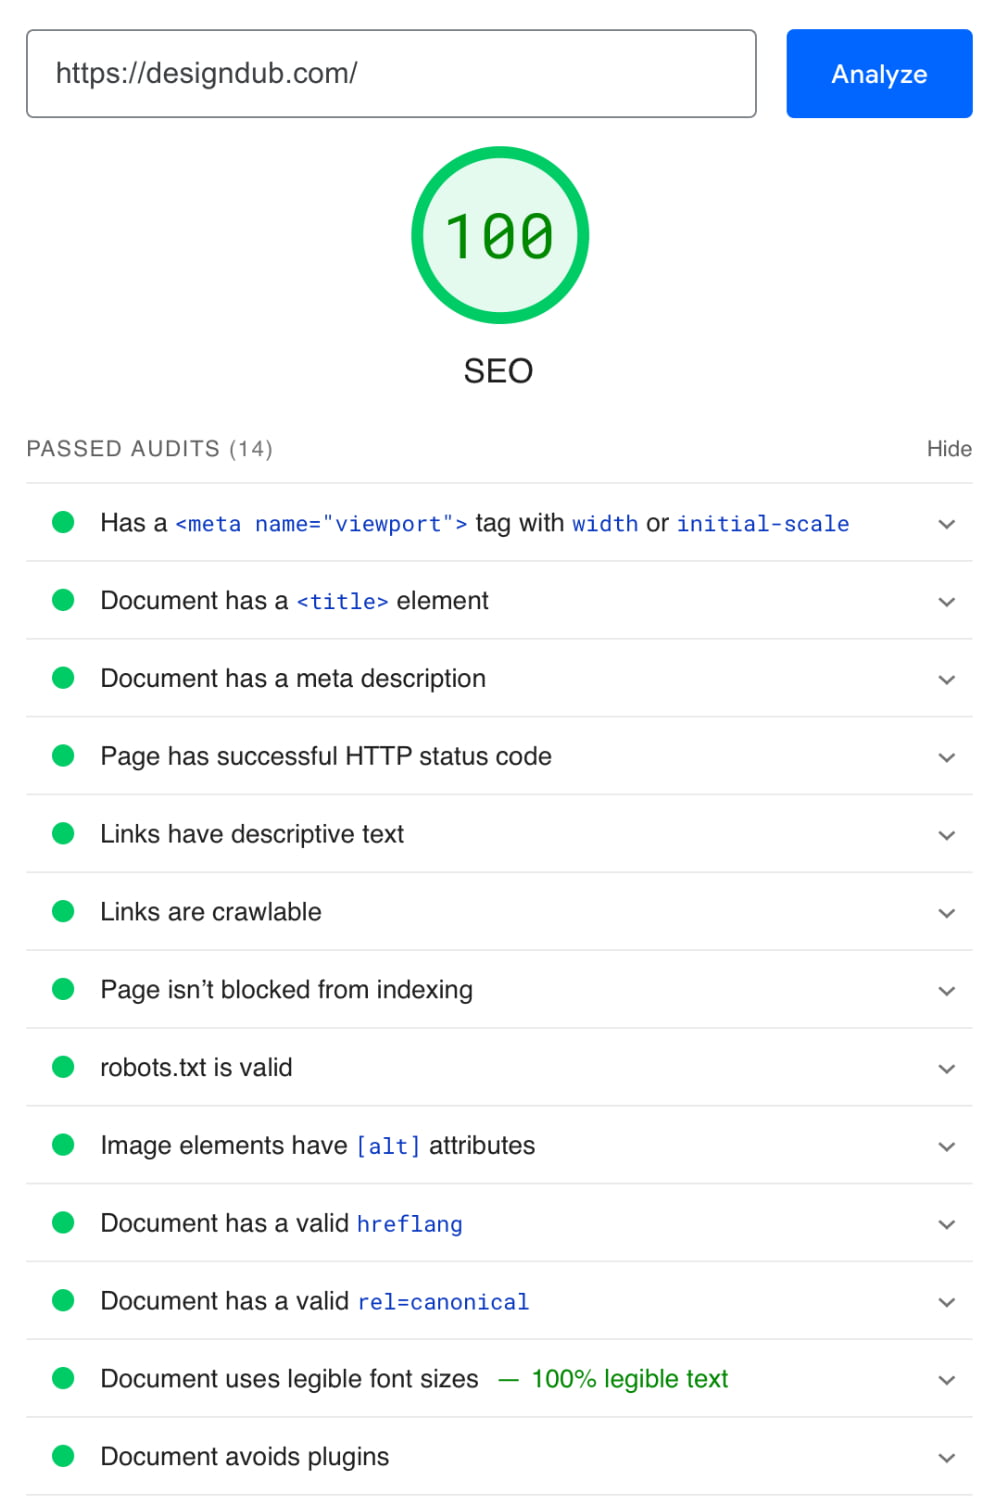 Google Page insight where DesignDub.com scores 100% on SEO friendly design